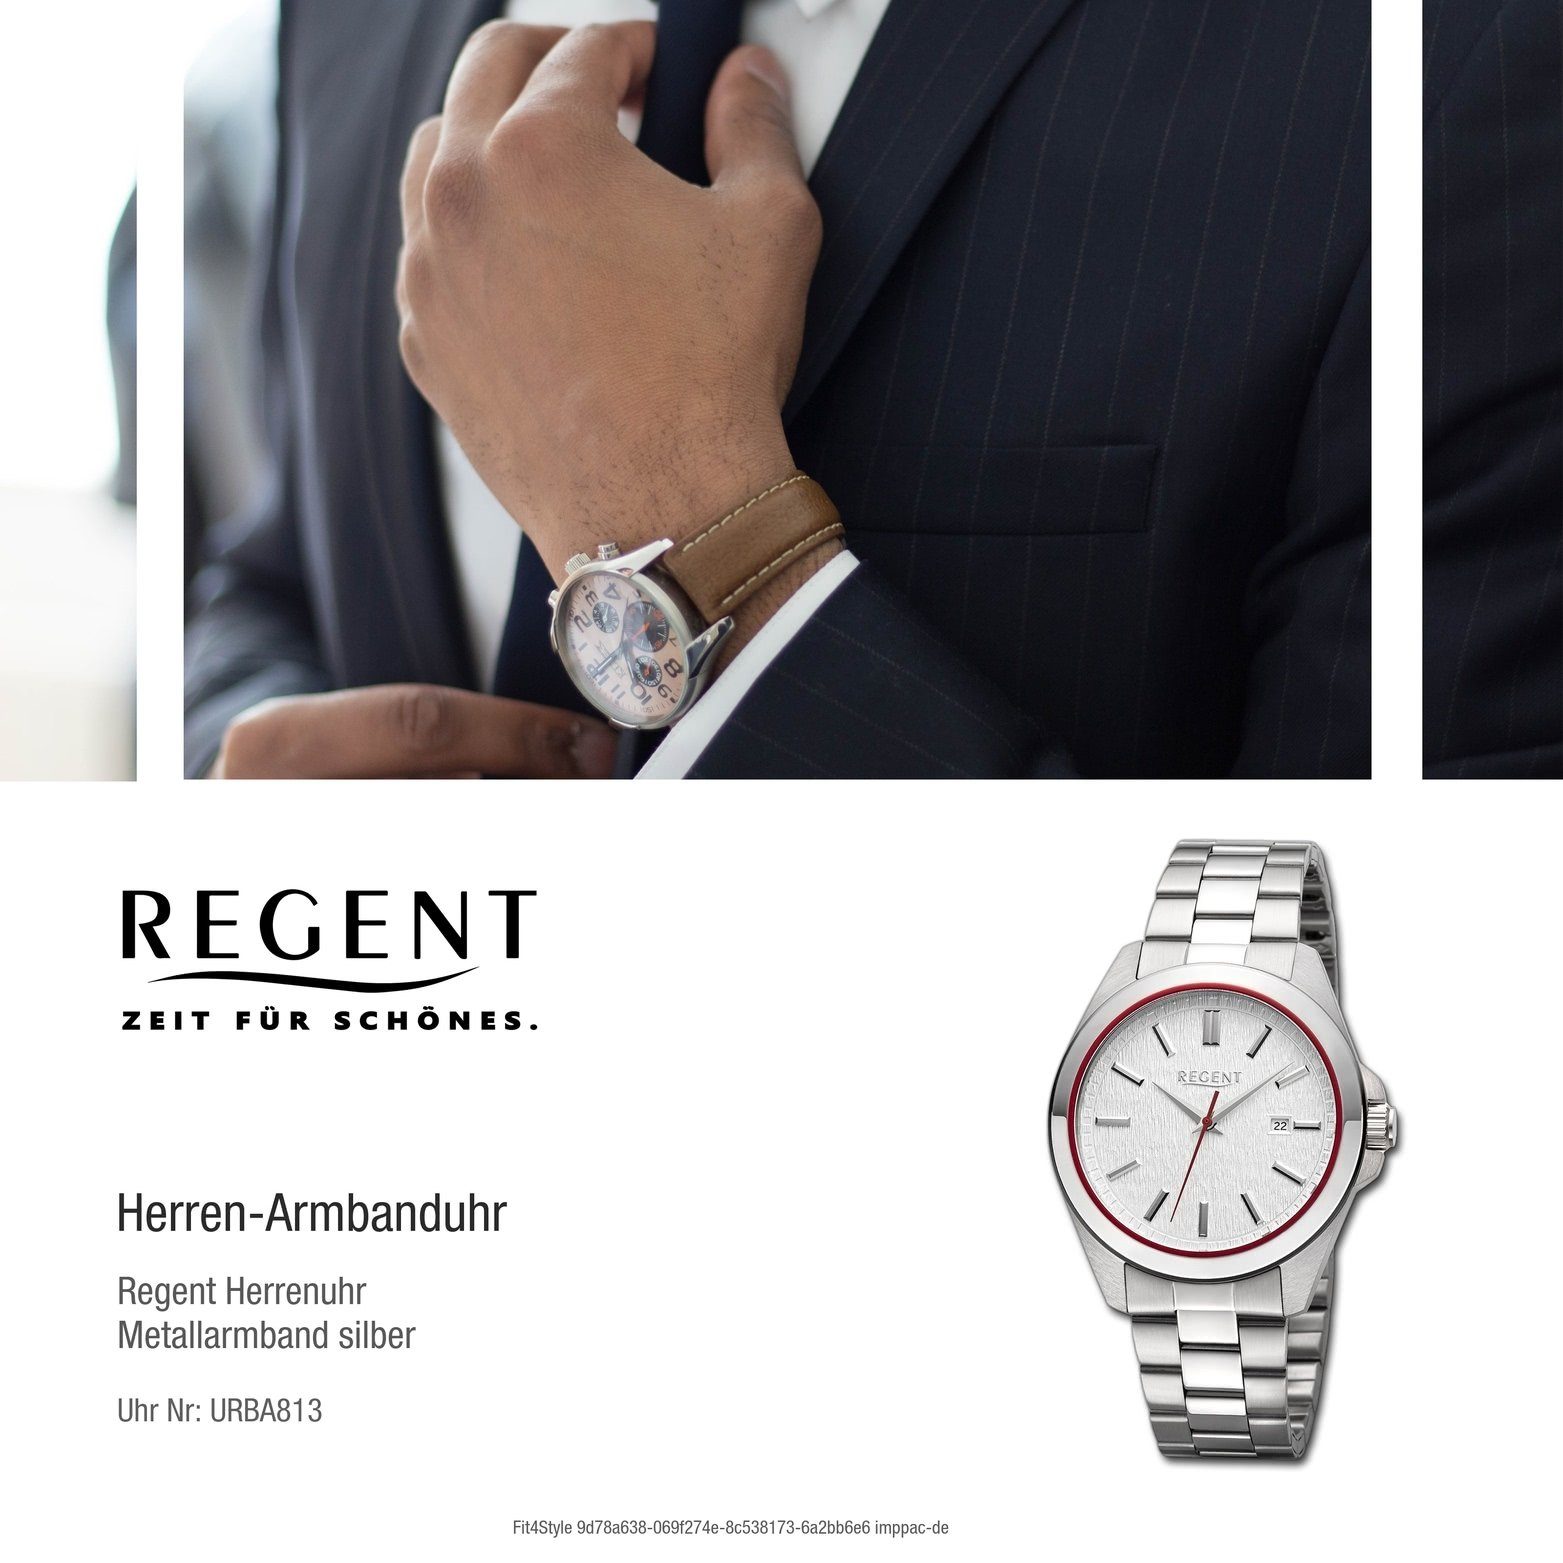 Regent Quarzuhr Regent Herren Armbanduhr (ca. Herrenuhr silber, groß 41mm) Gehäuse, rundes Metallarmband extra Analog